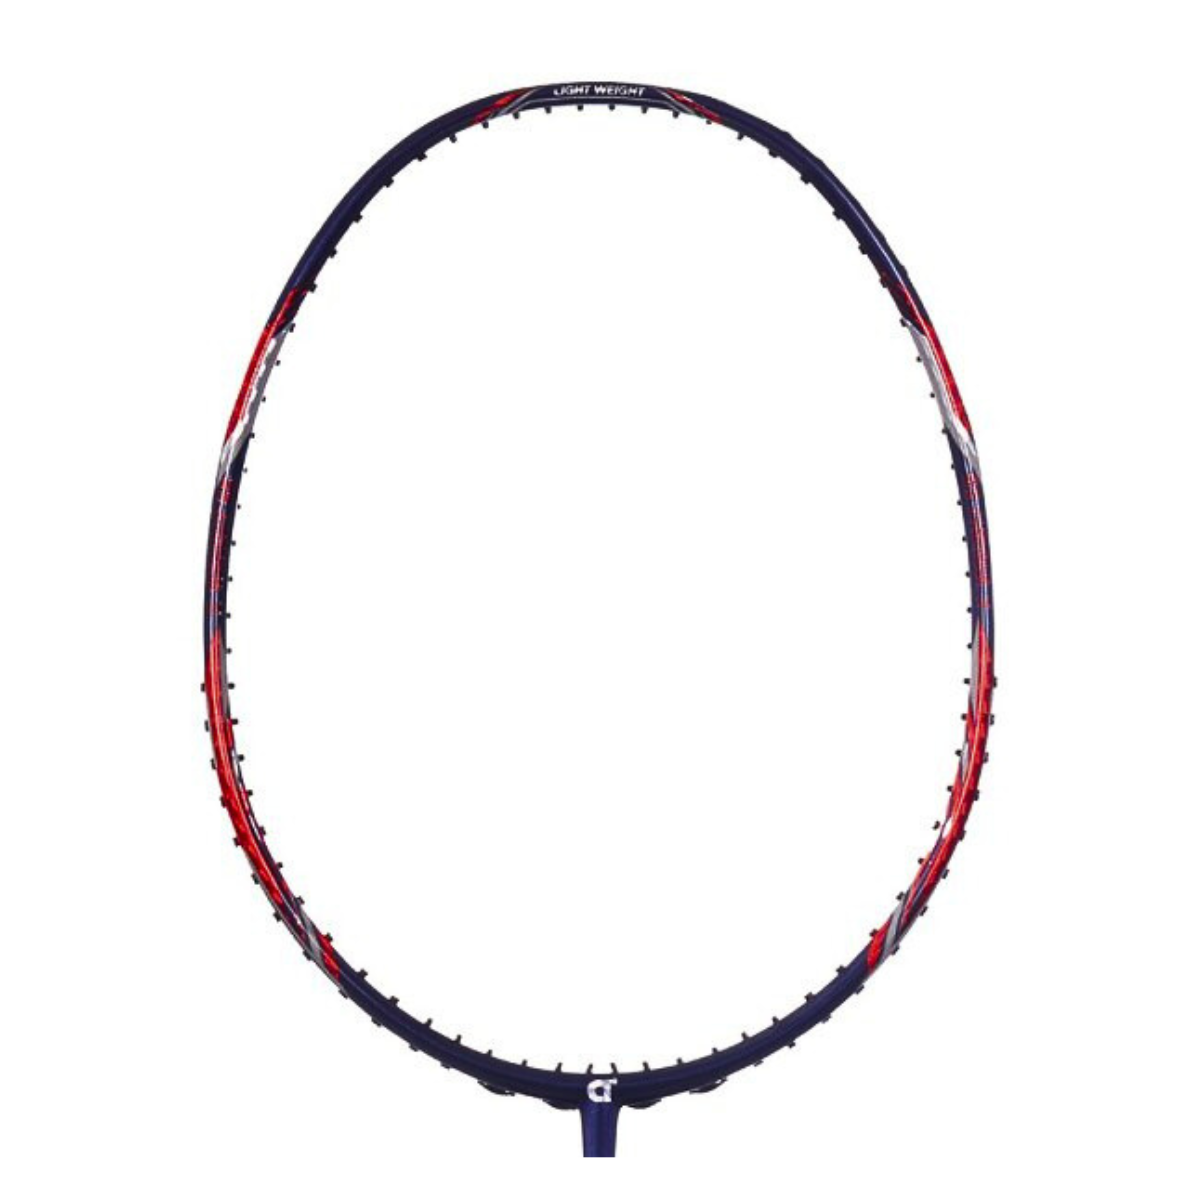 Apacs Feather Weight 55 Badminton Racquet - Unstrung